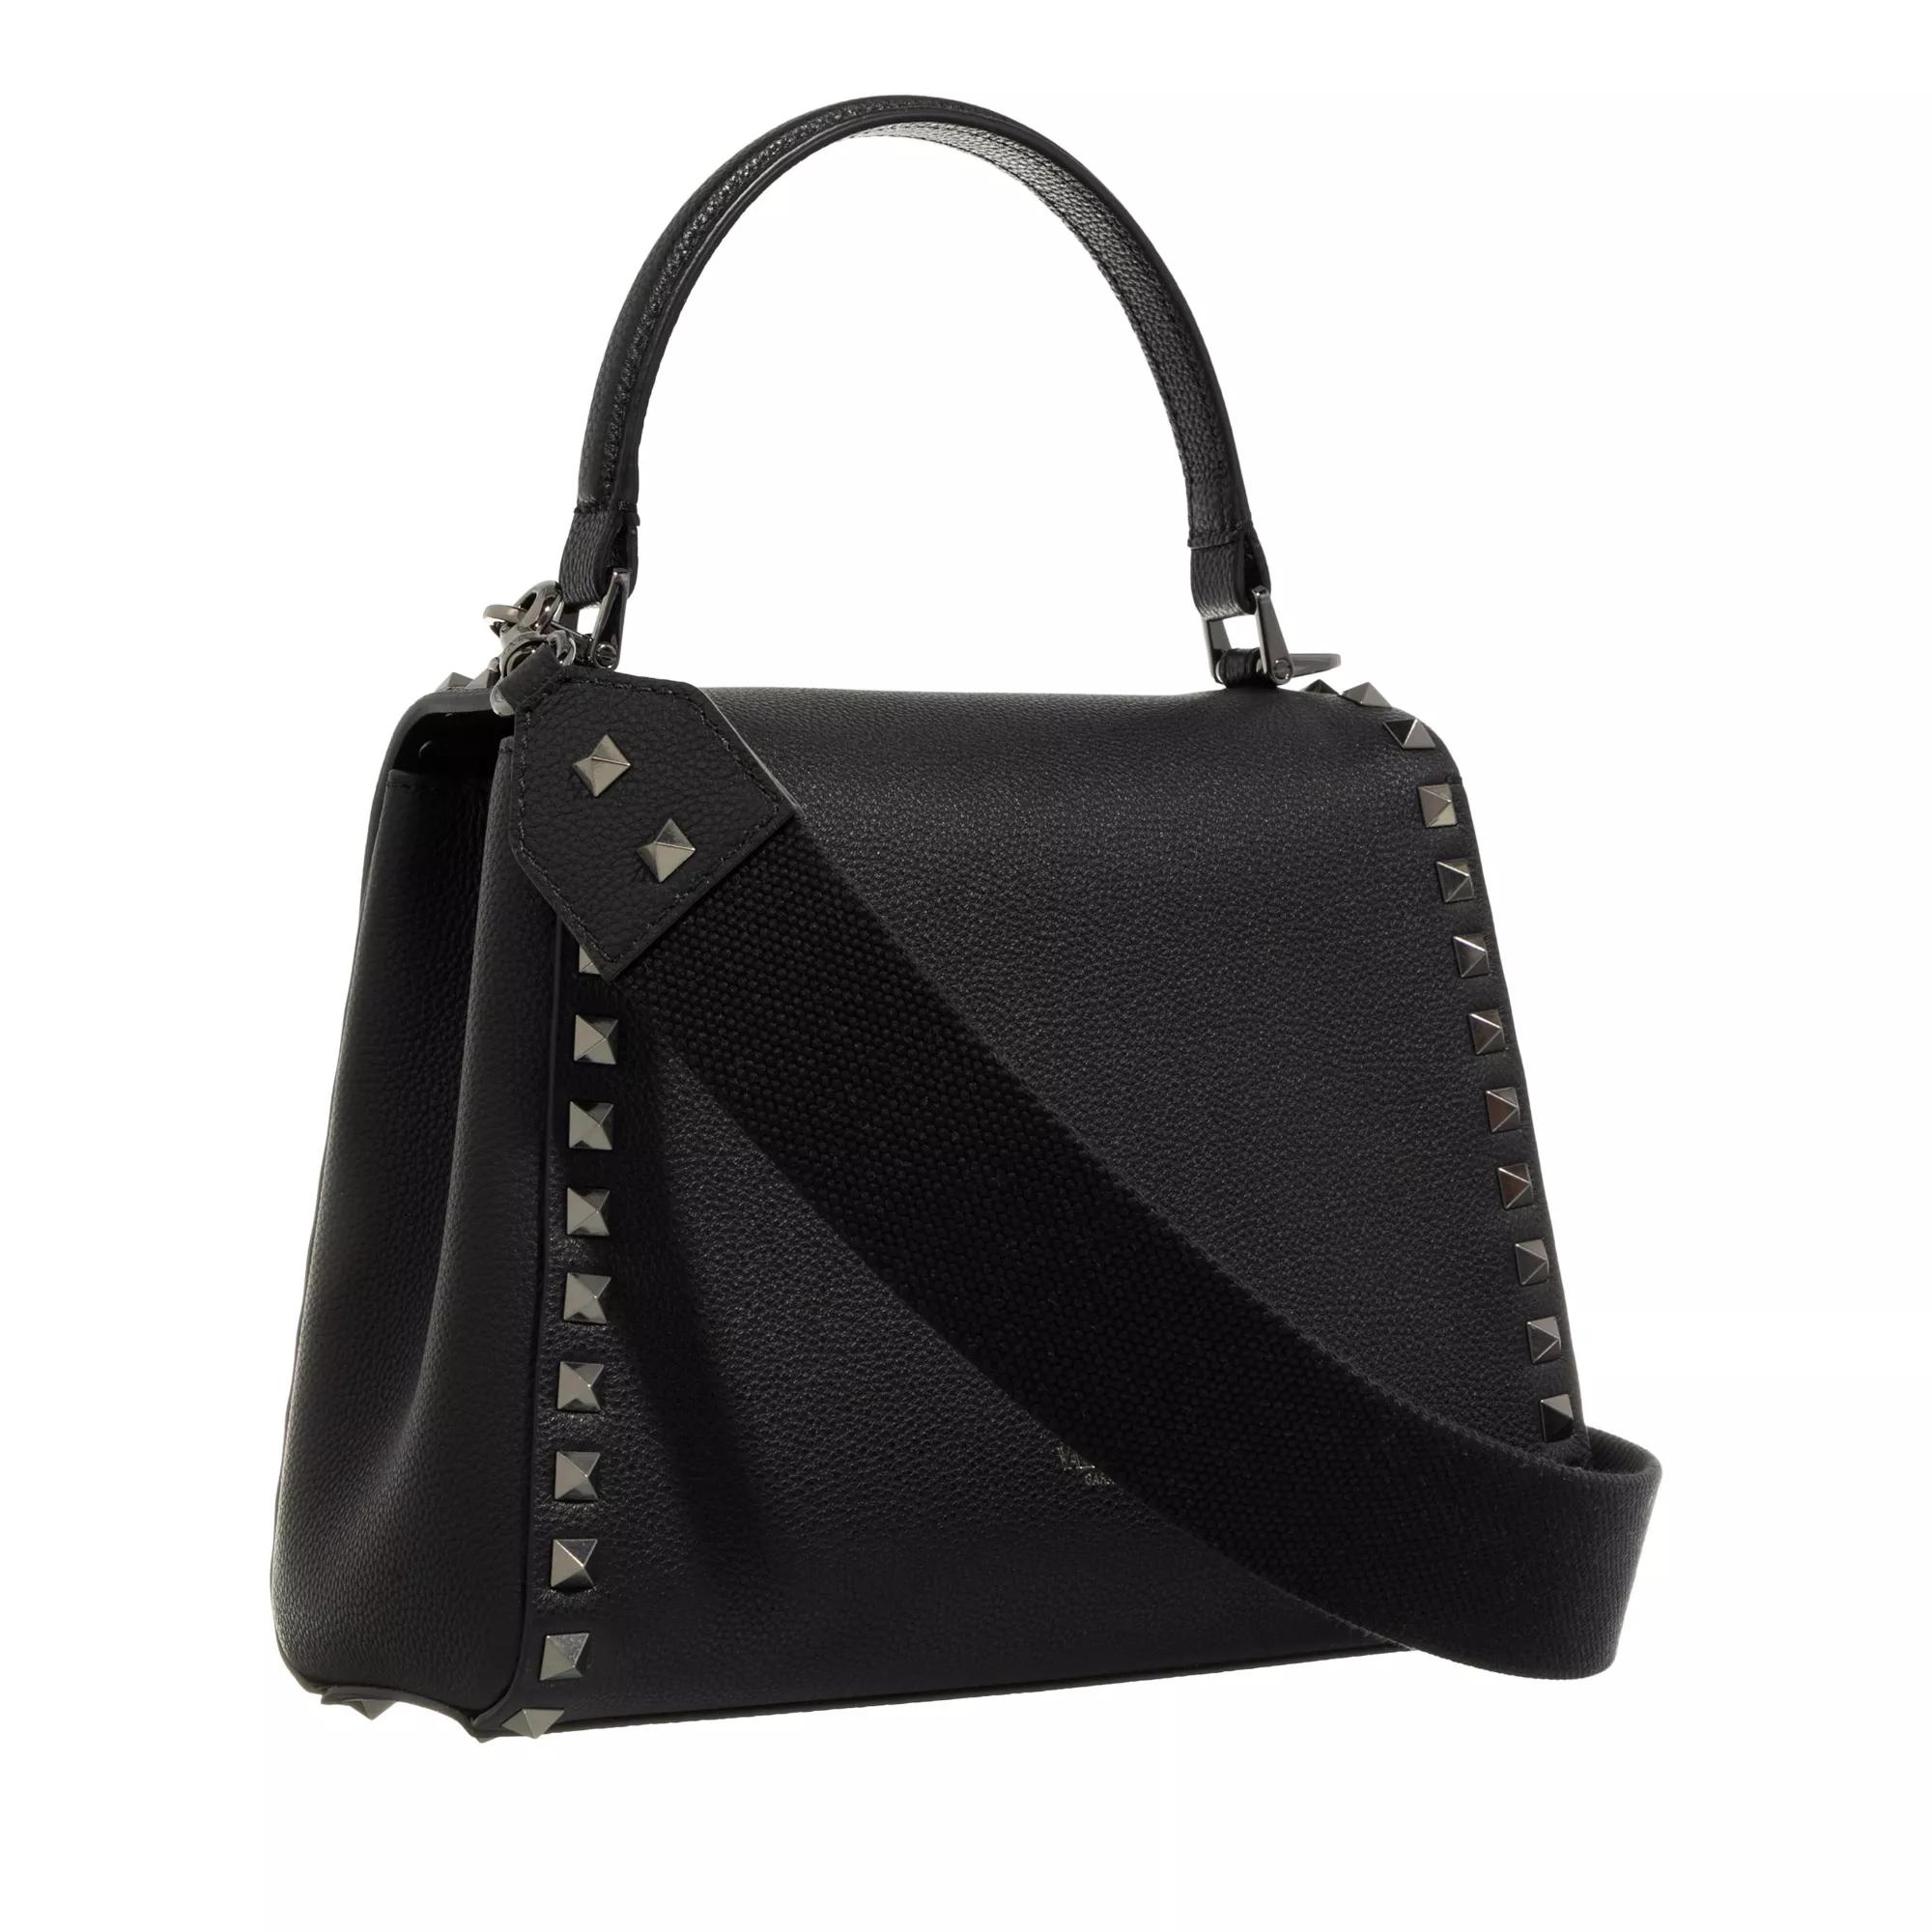 Valentino Garavani Shoppers Small Top Handle Bag in zwart